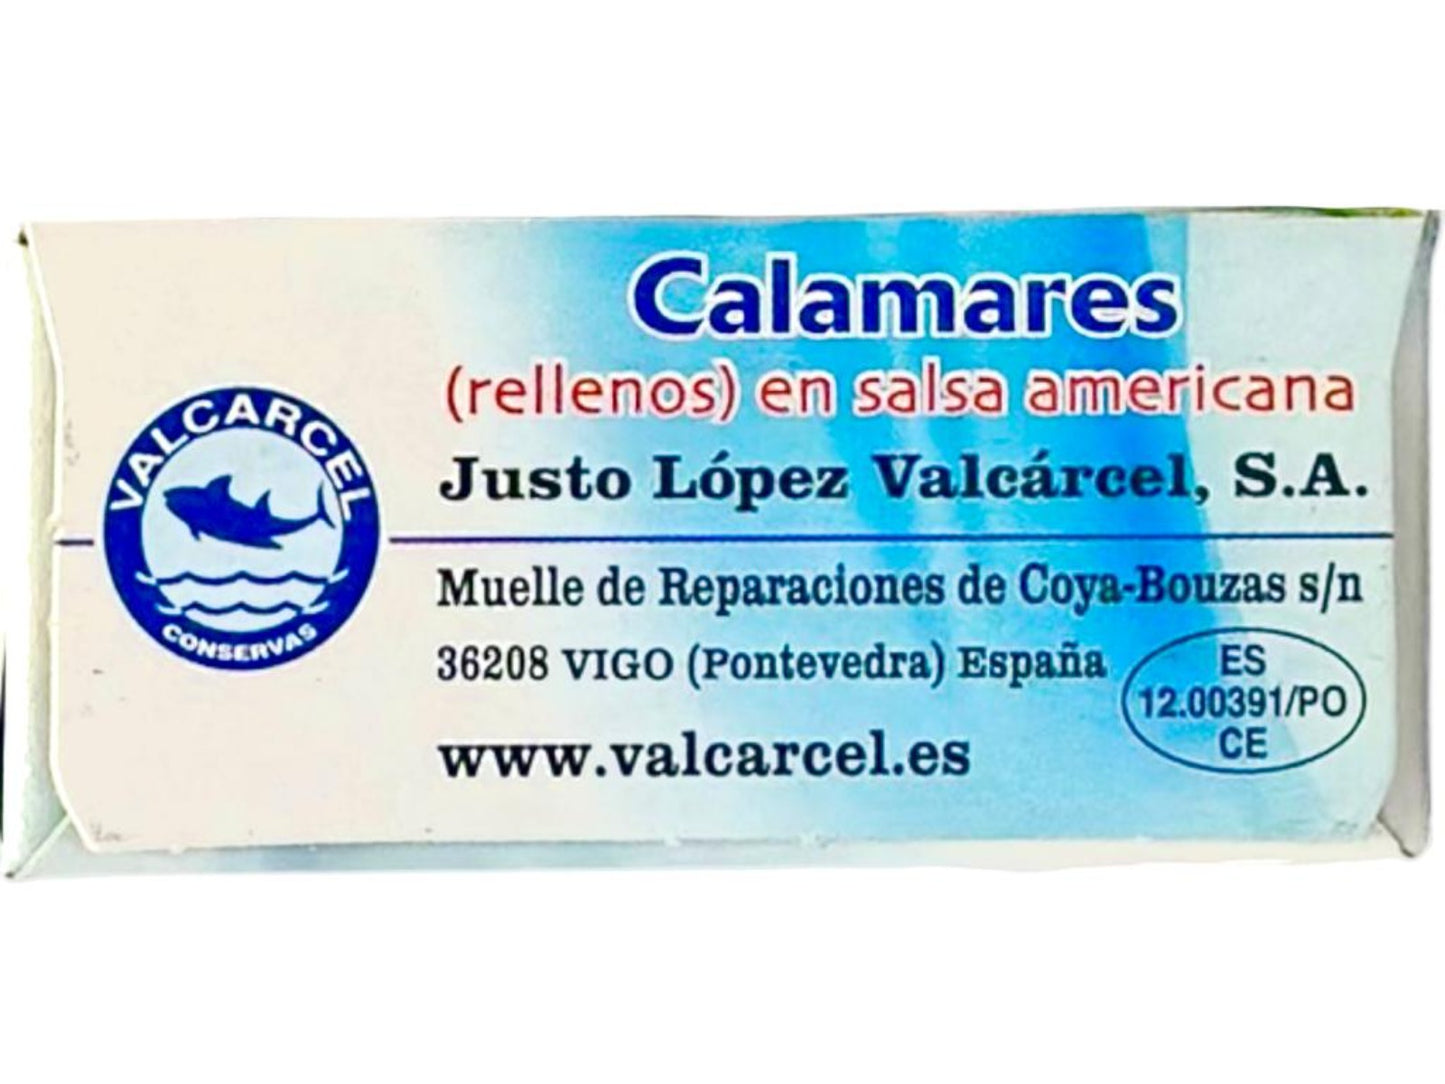 Vigilante Calamares (Rellenos) en Salsa Americana - Squids (Stuffed) in American Sauce 111g